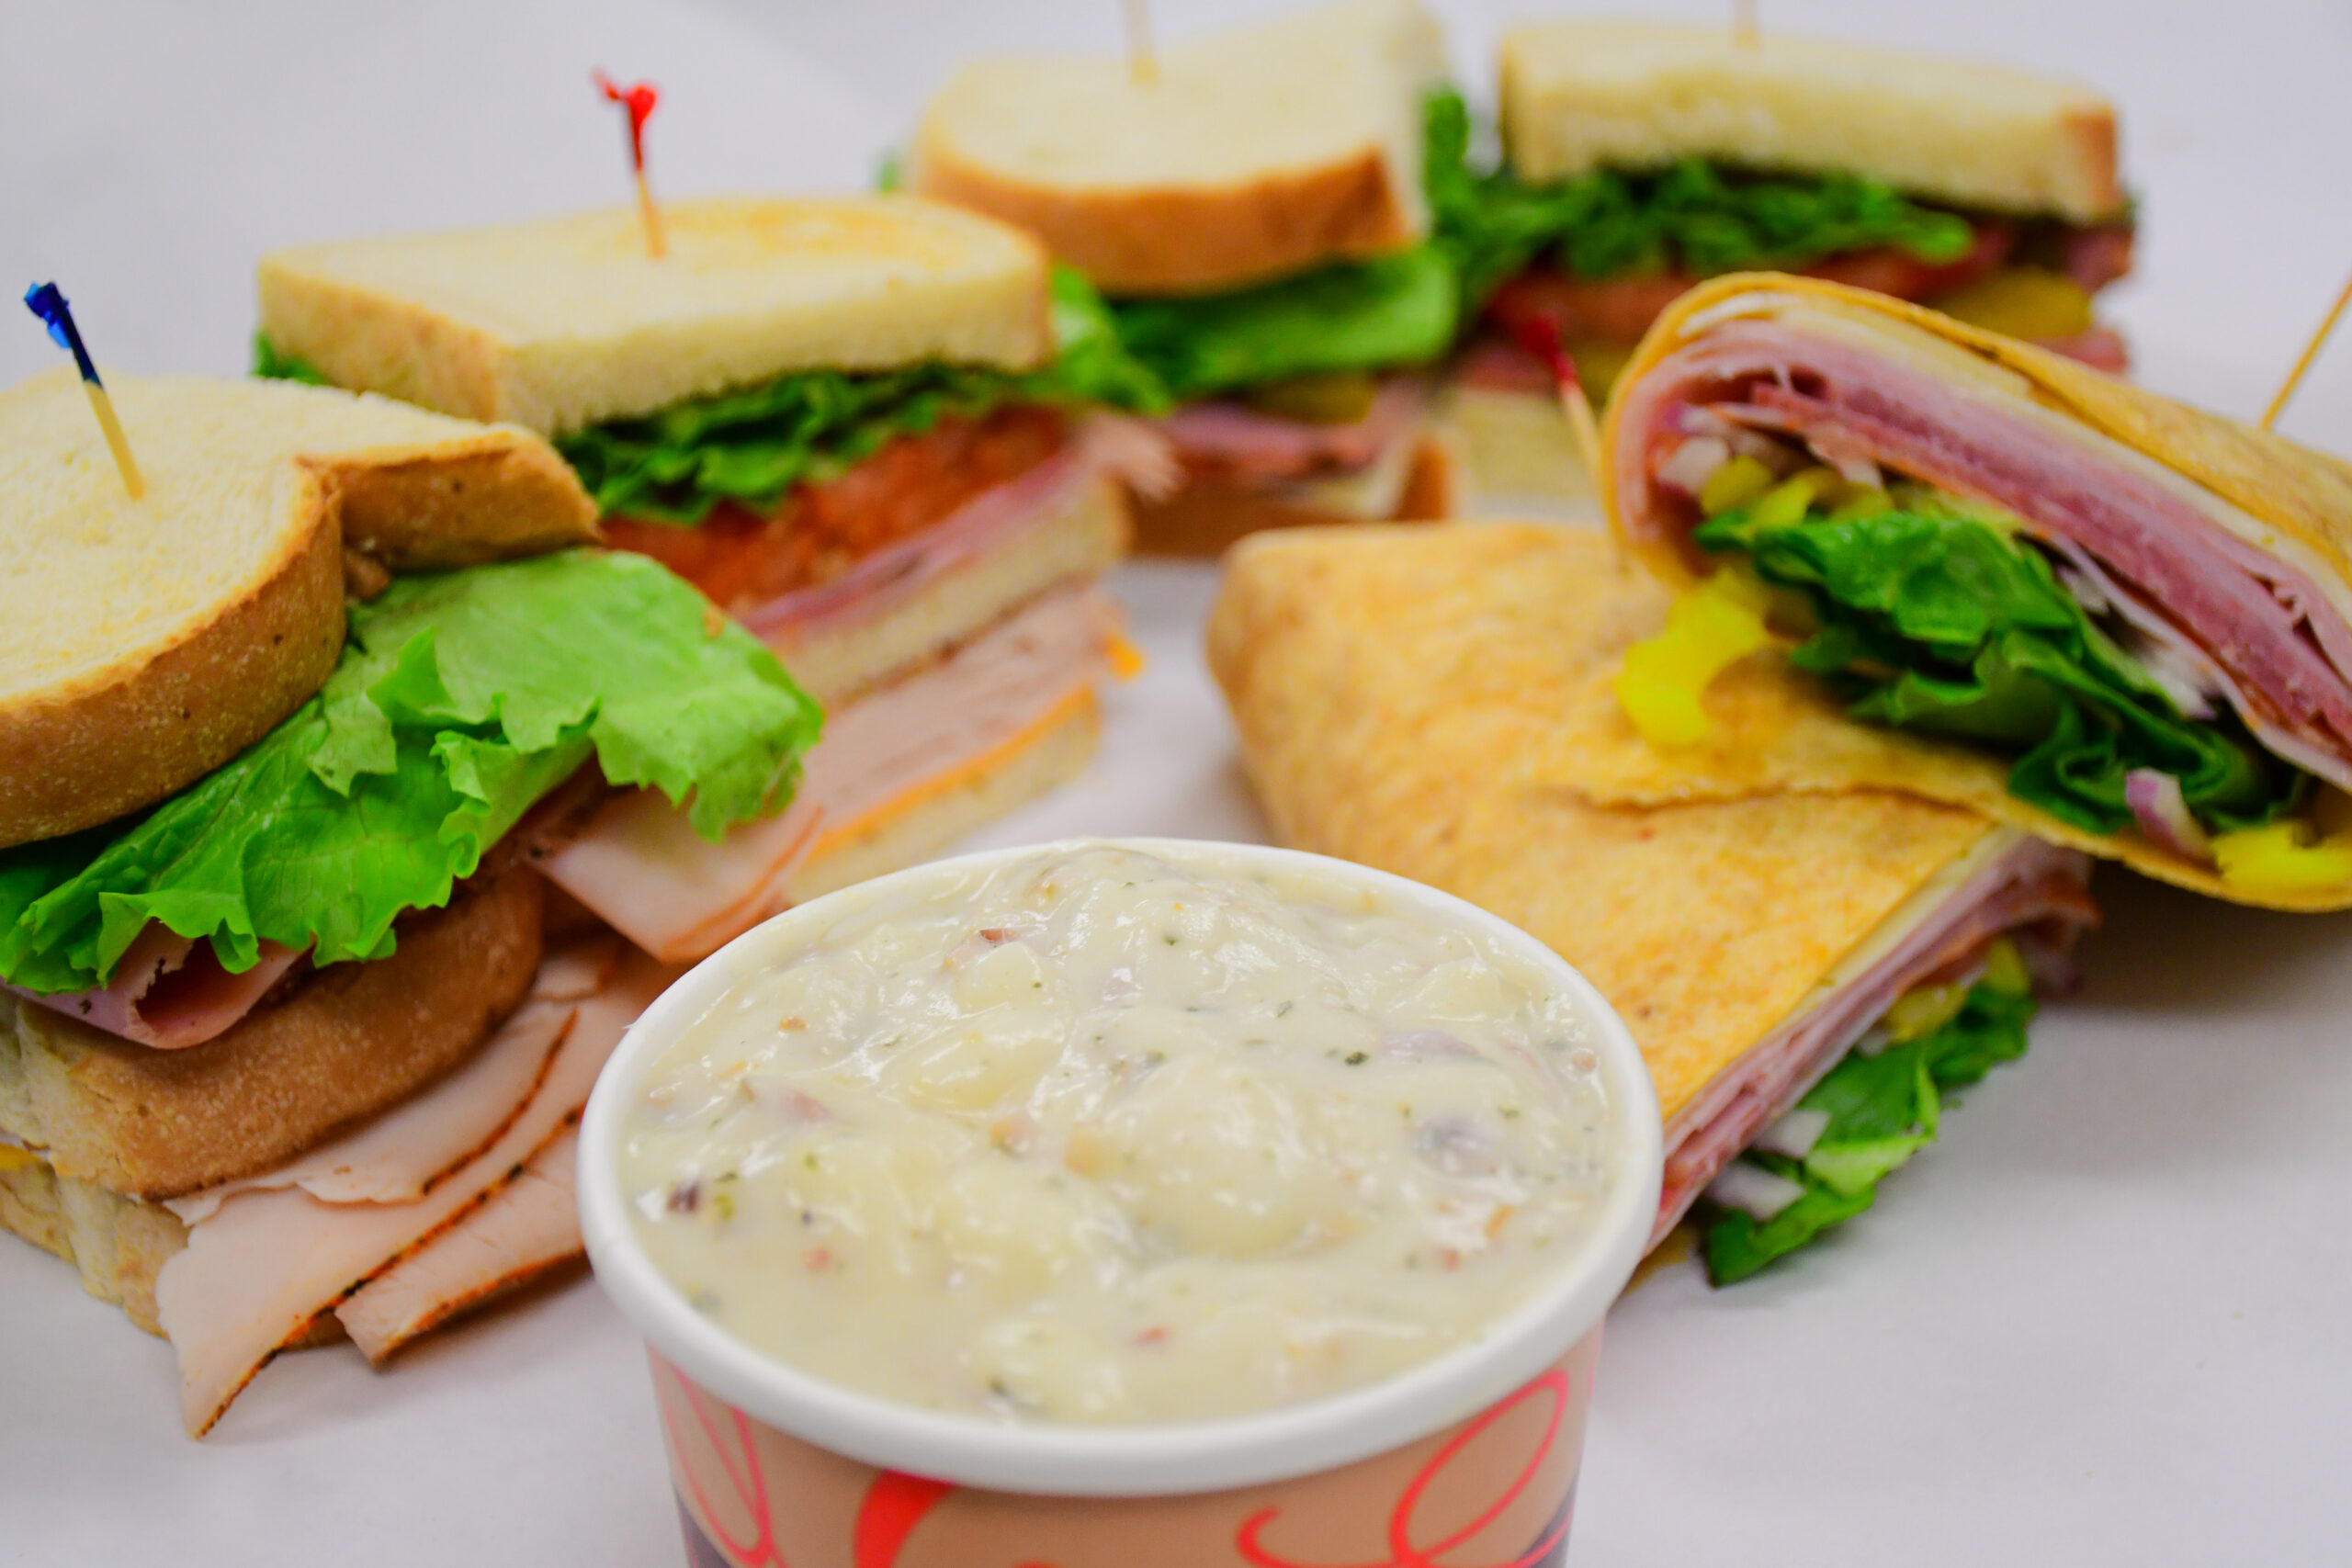 Delicious fresh Deli sandwich & hot soup lunch - Picture of